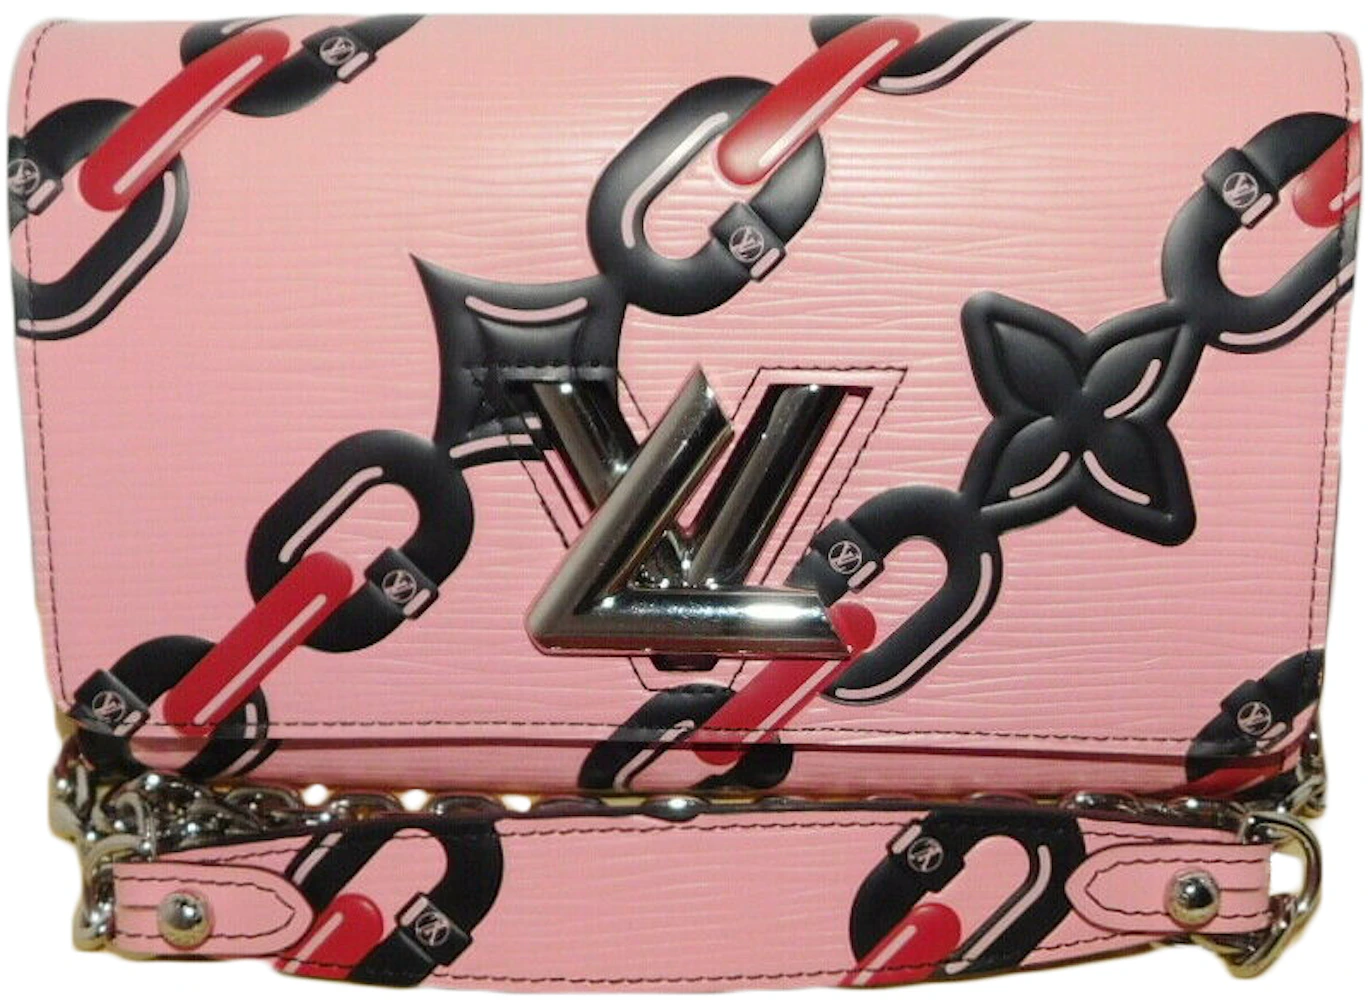 Louis Vuitton Pink Chain Flower Epi Leather Twist Wallet on Chain